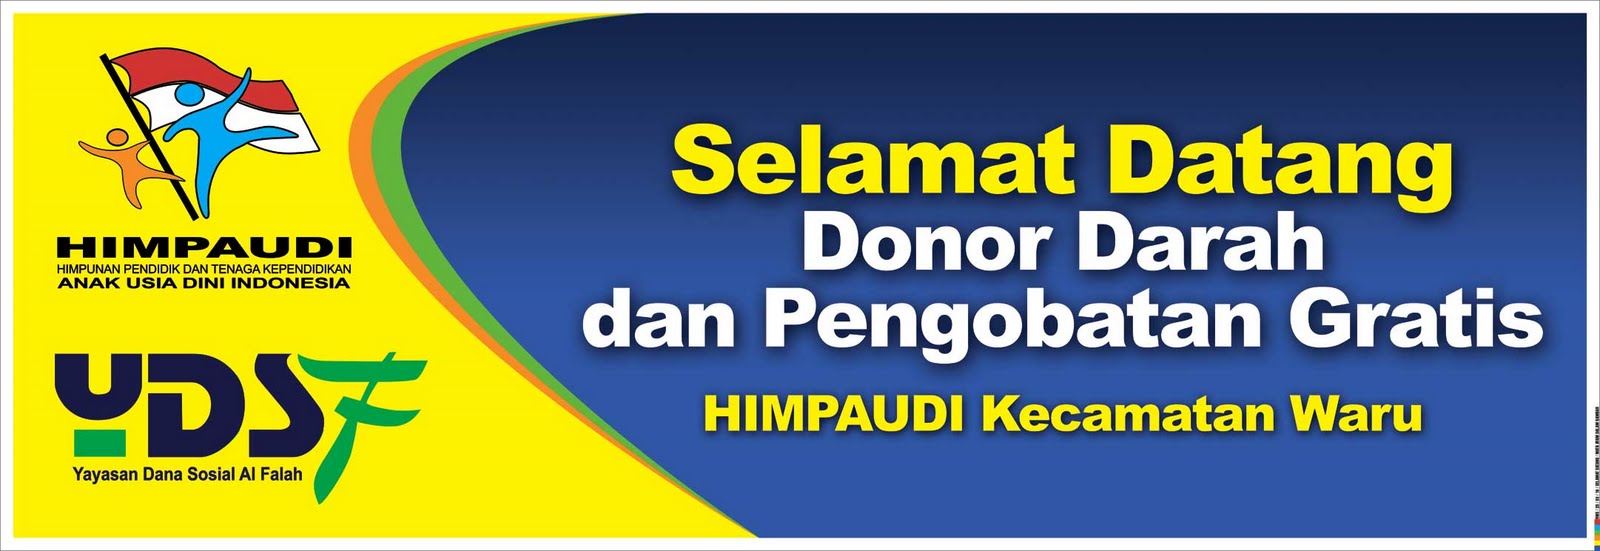 smart advertising Spanduk Selamat Datang Donor Darah 